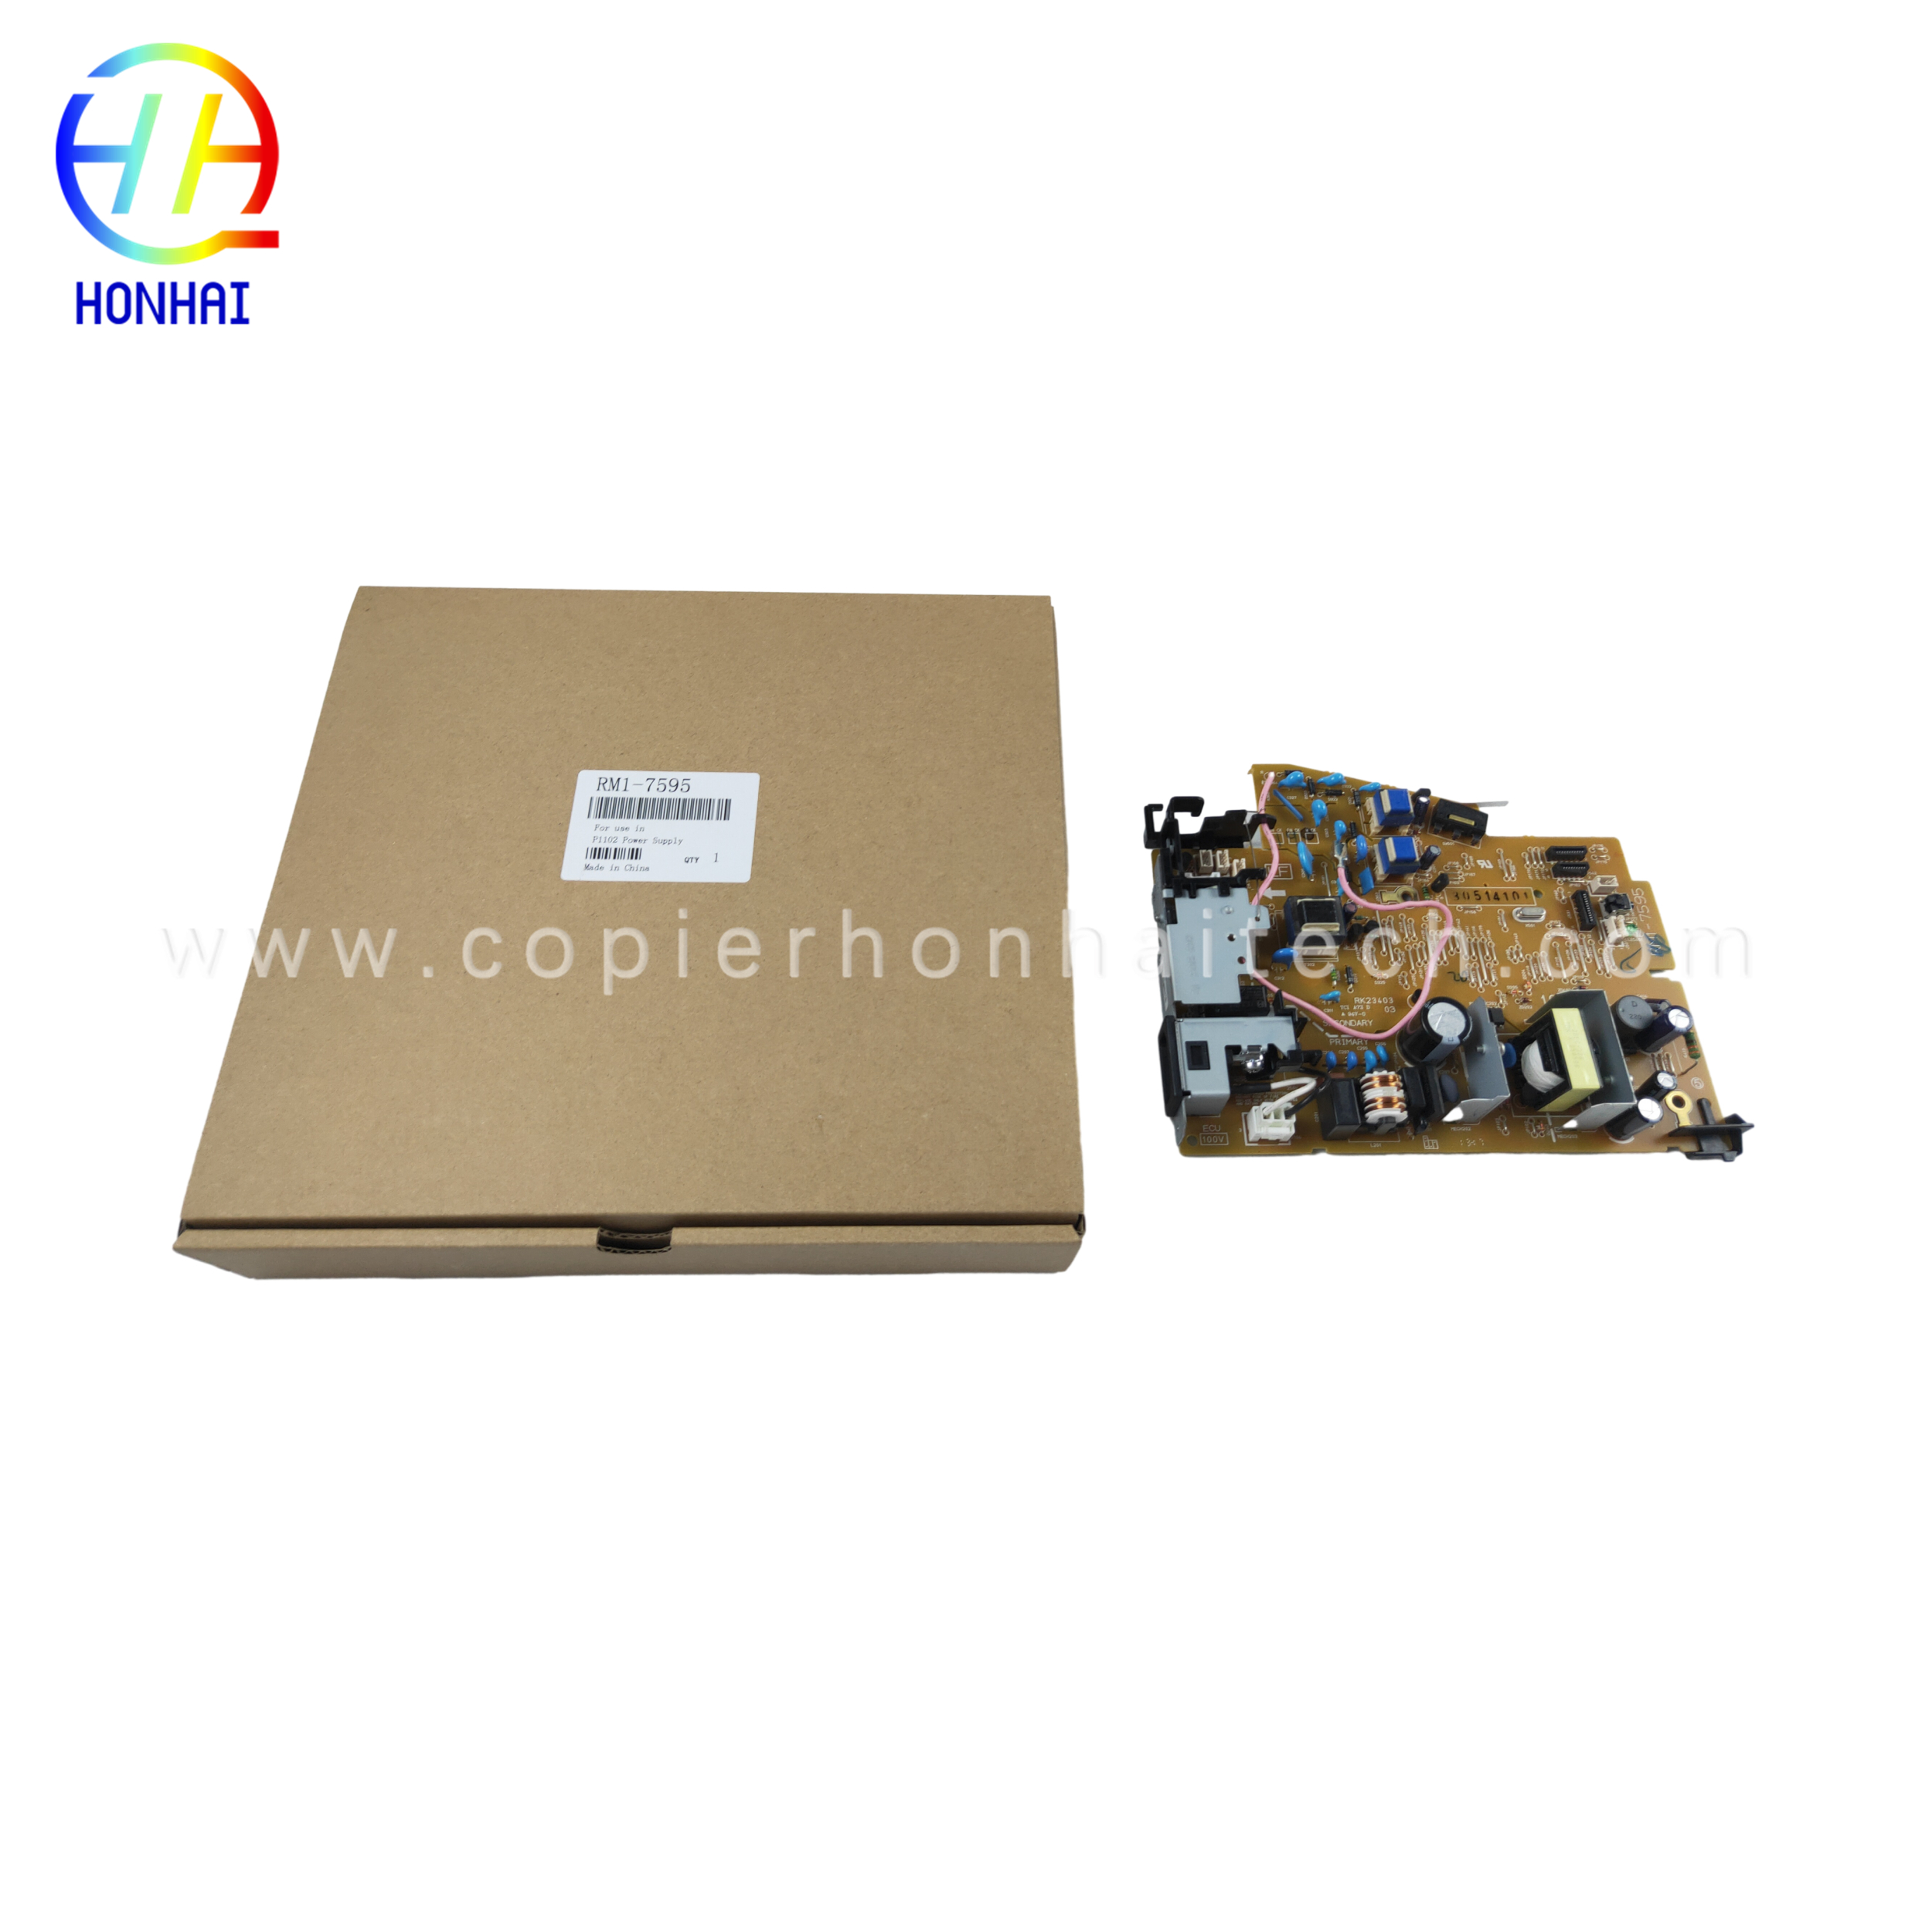 https://www.copierhonhaitech.com/power-supply-board-110v-original-95-new-for-hp-p1102w-rm1-7595-engine-control-power-board-product/